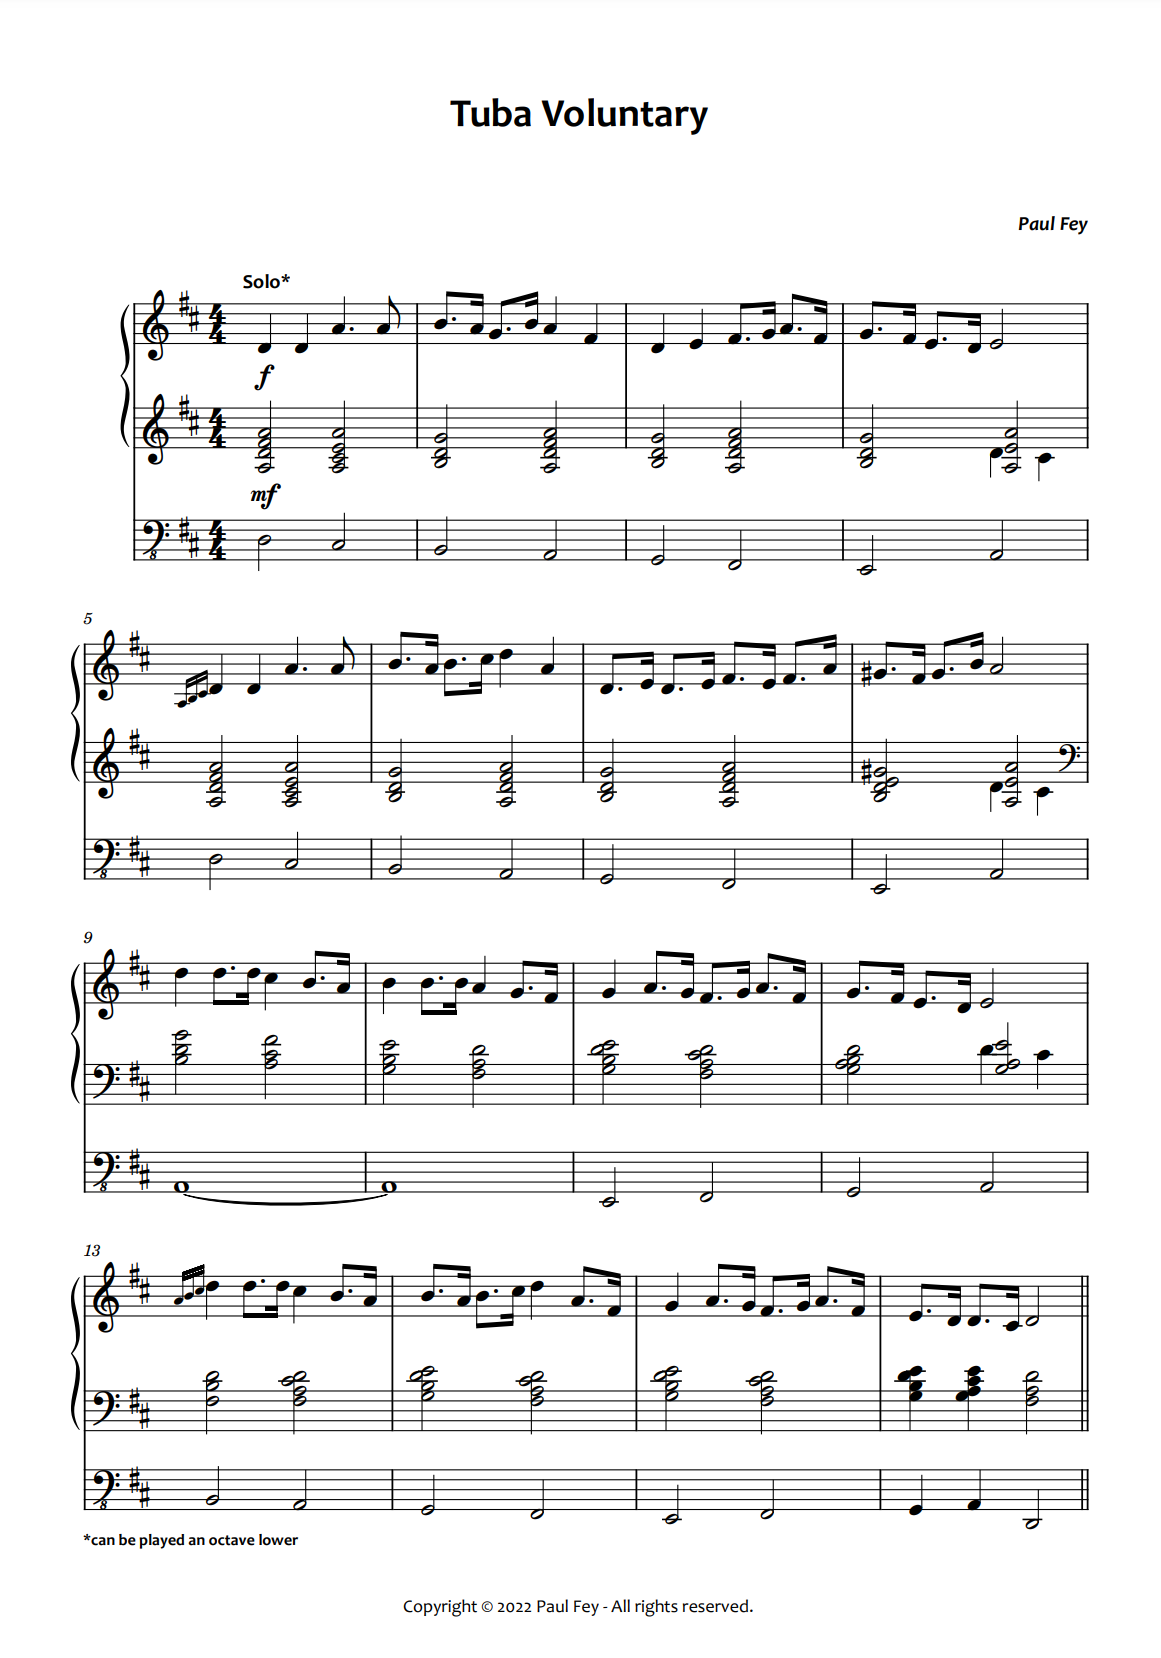 Tuba voluntary (Sheet Music) - Music for Organ by Paul Fey